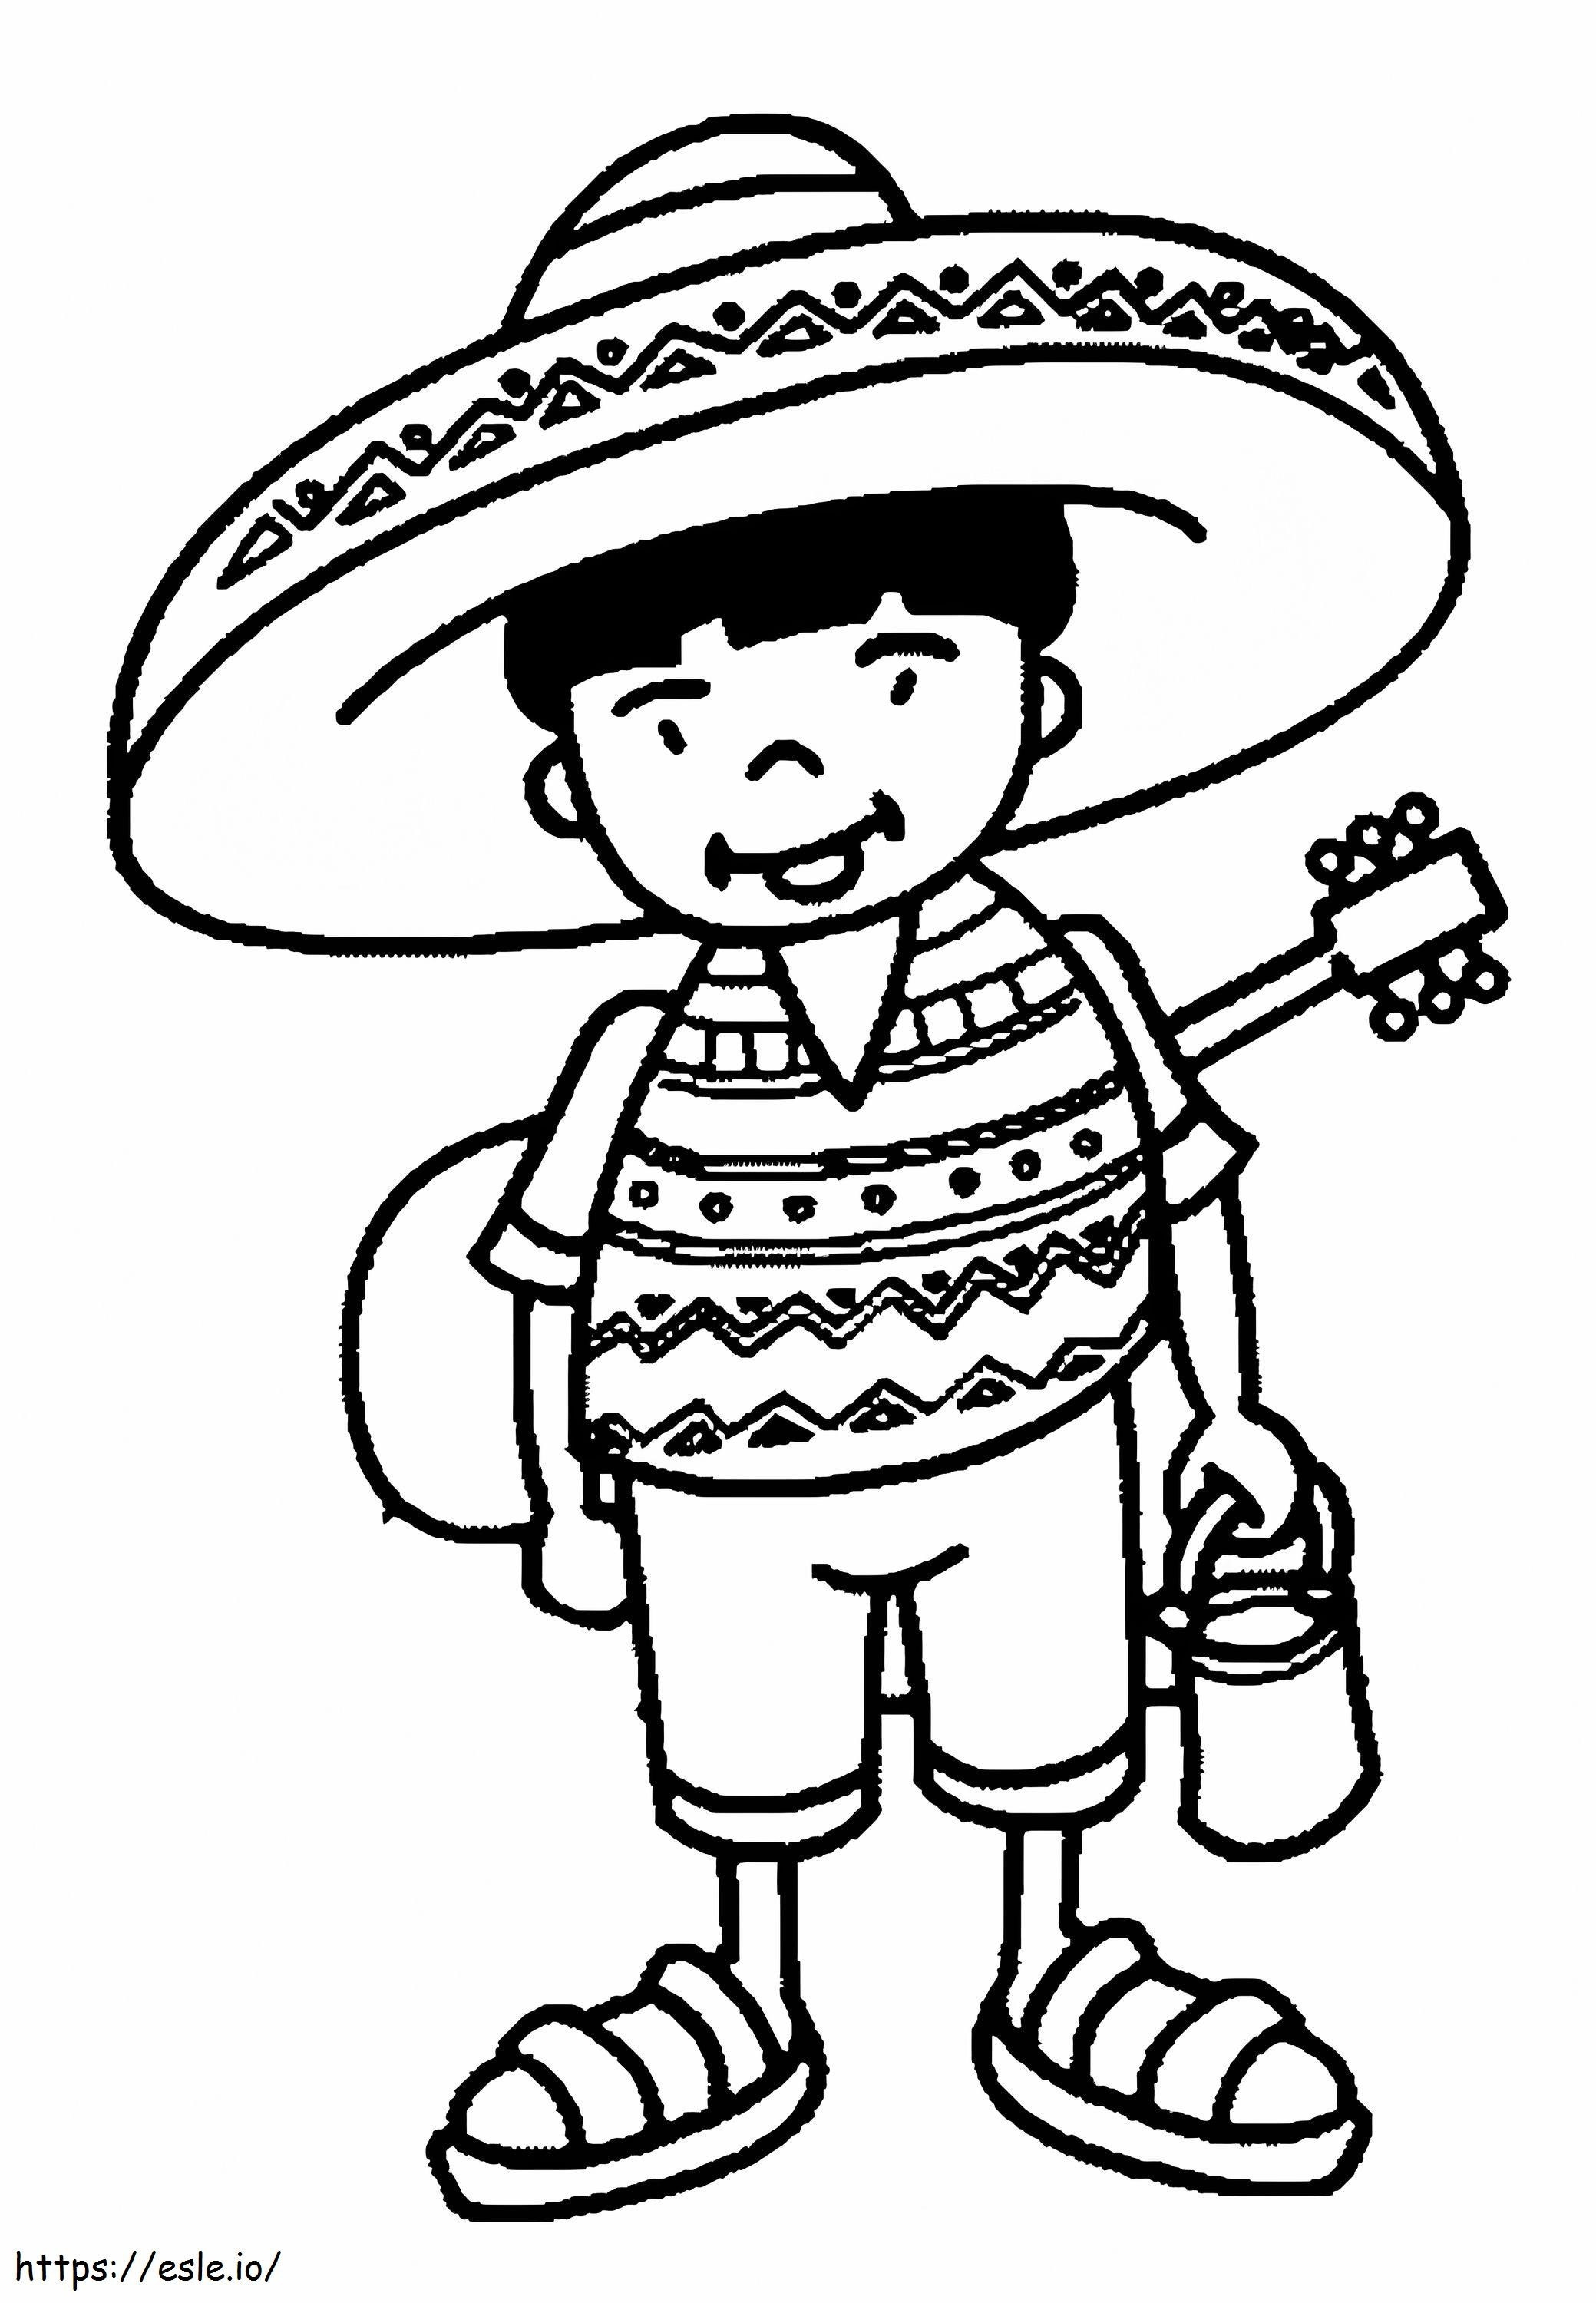 Boy With Sombrero coloring page